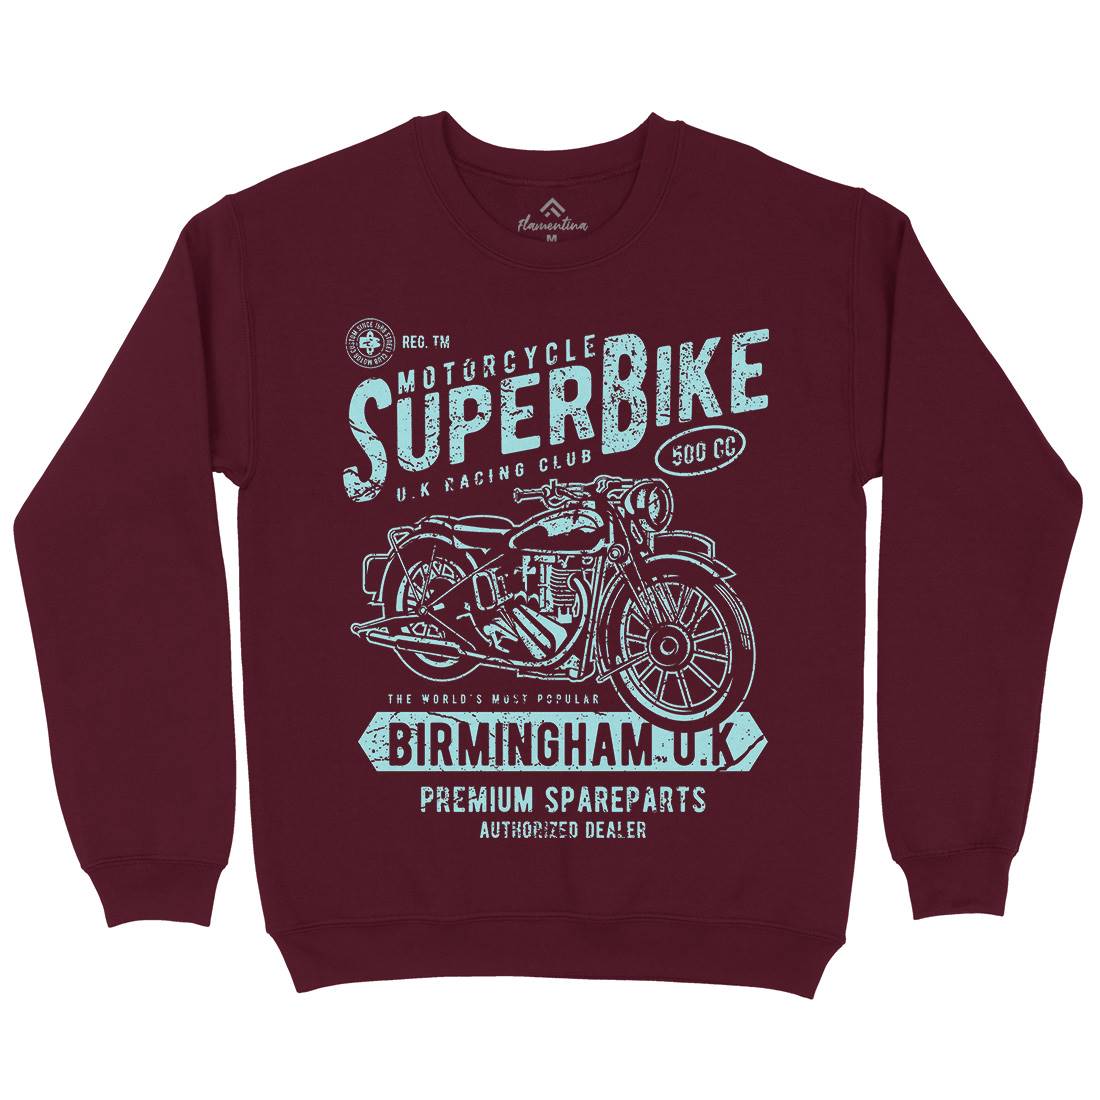 Super Bike Mens Crew Neck Sweatshirt Motorcycles A164